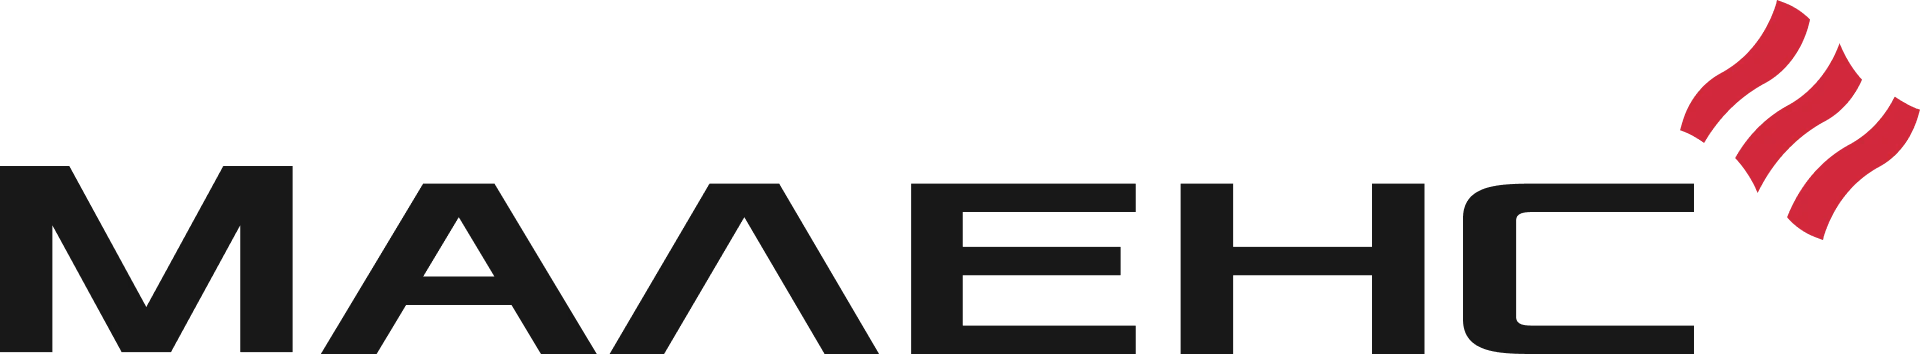 Логотип ООО "Маленс"